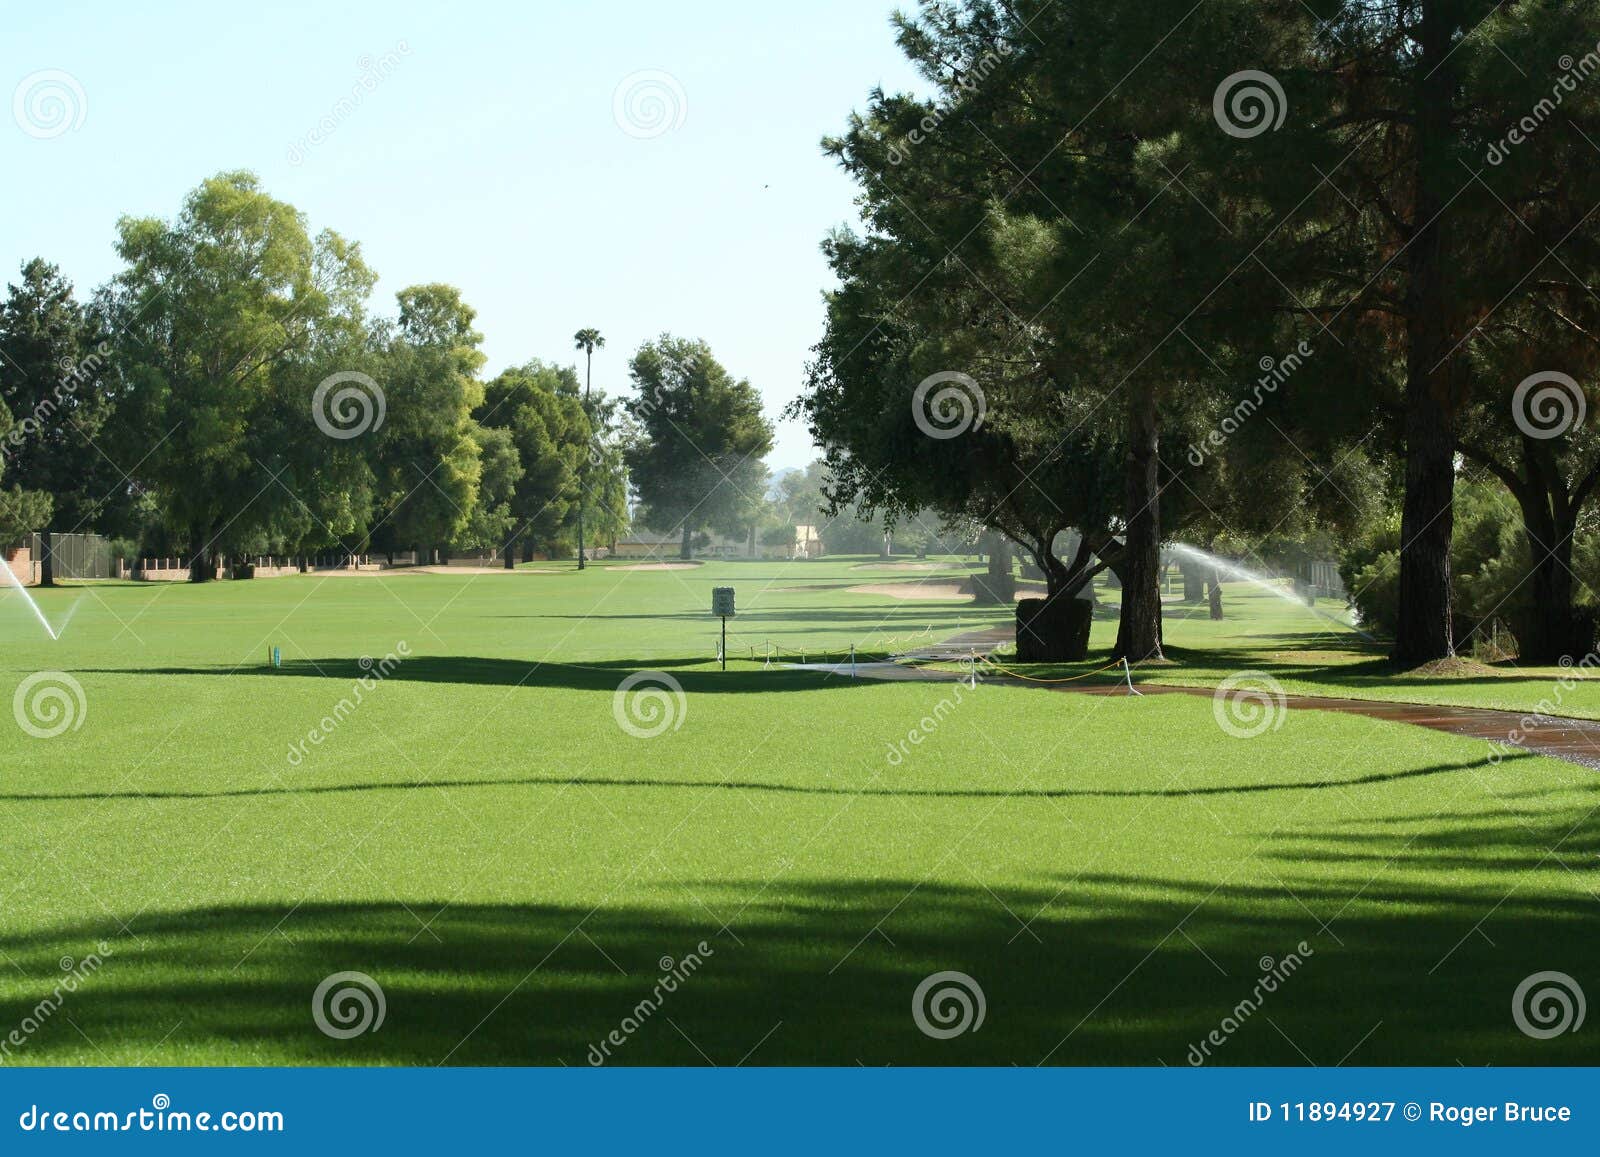 free clipart golf fairway - photo #29